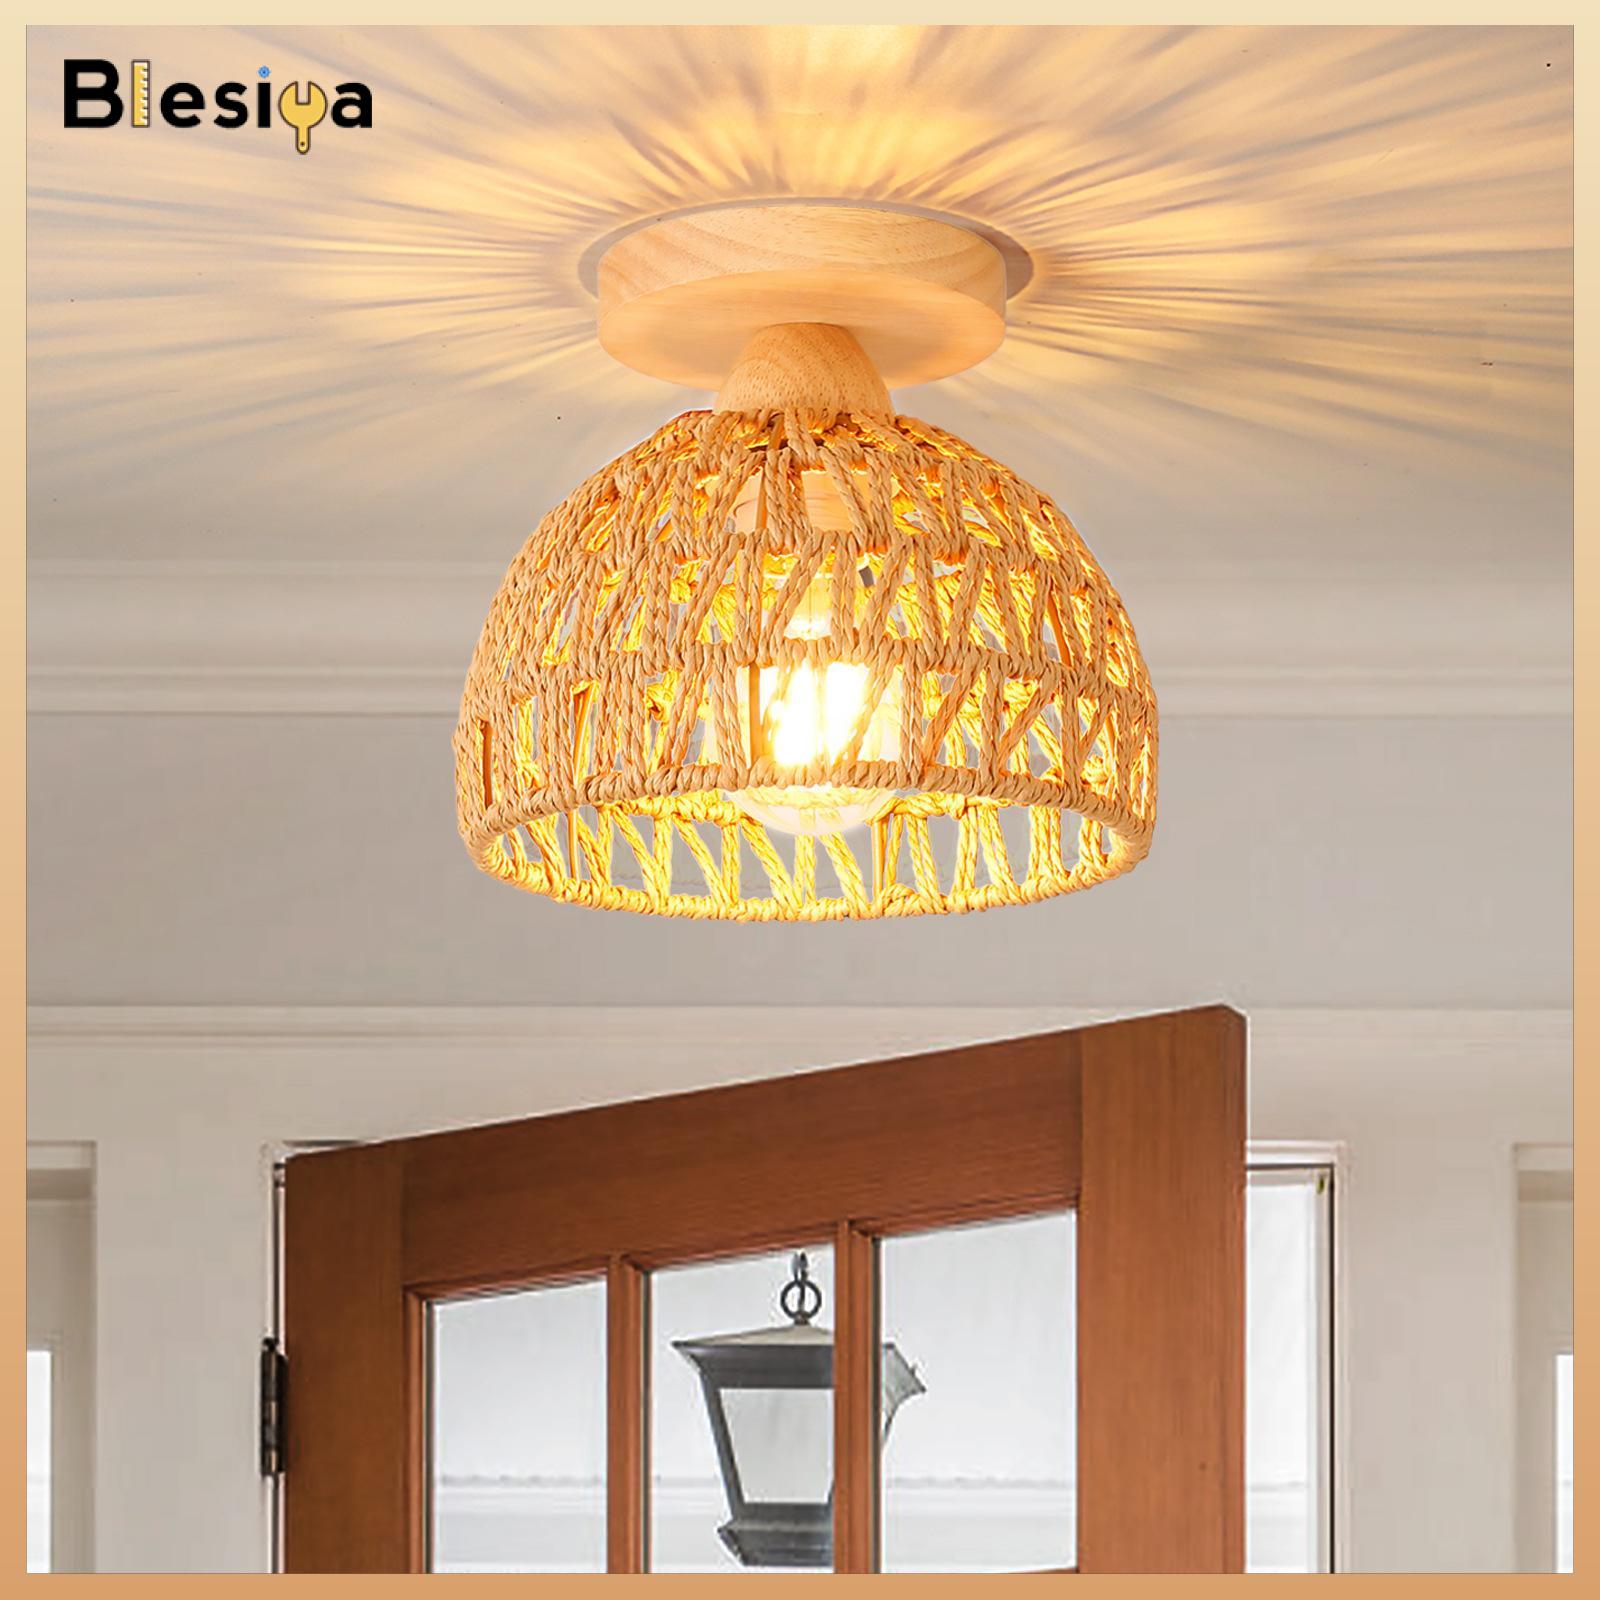 Blesiya Rattan Ceiling Light Shade EU 220V E27 Base Rustic for Cafe